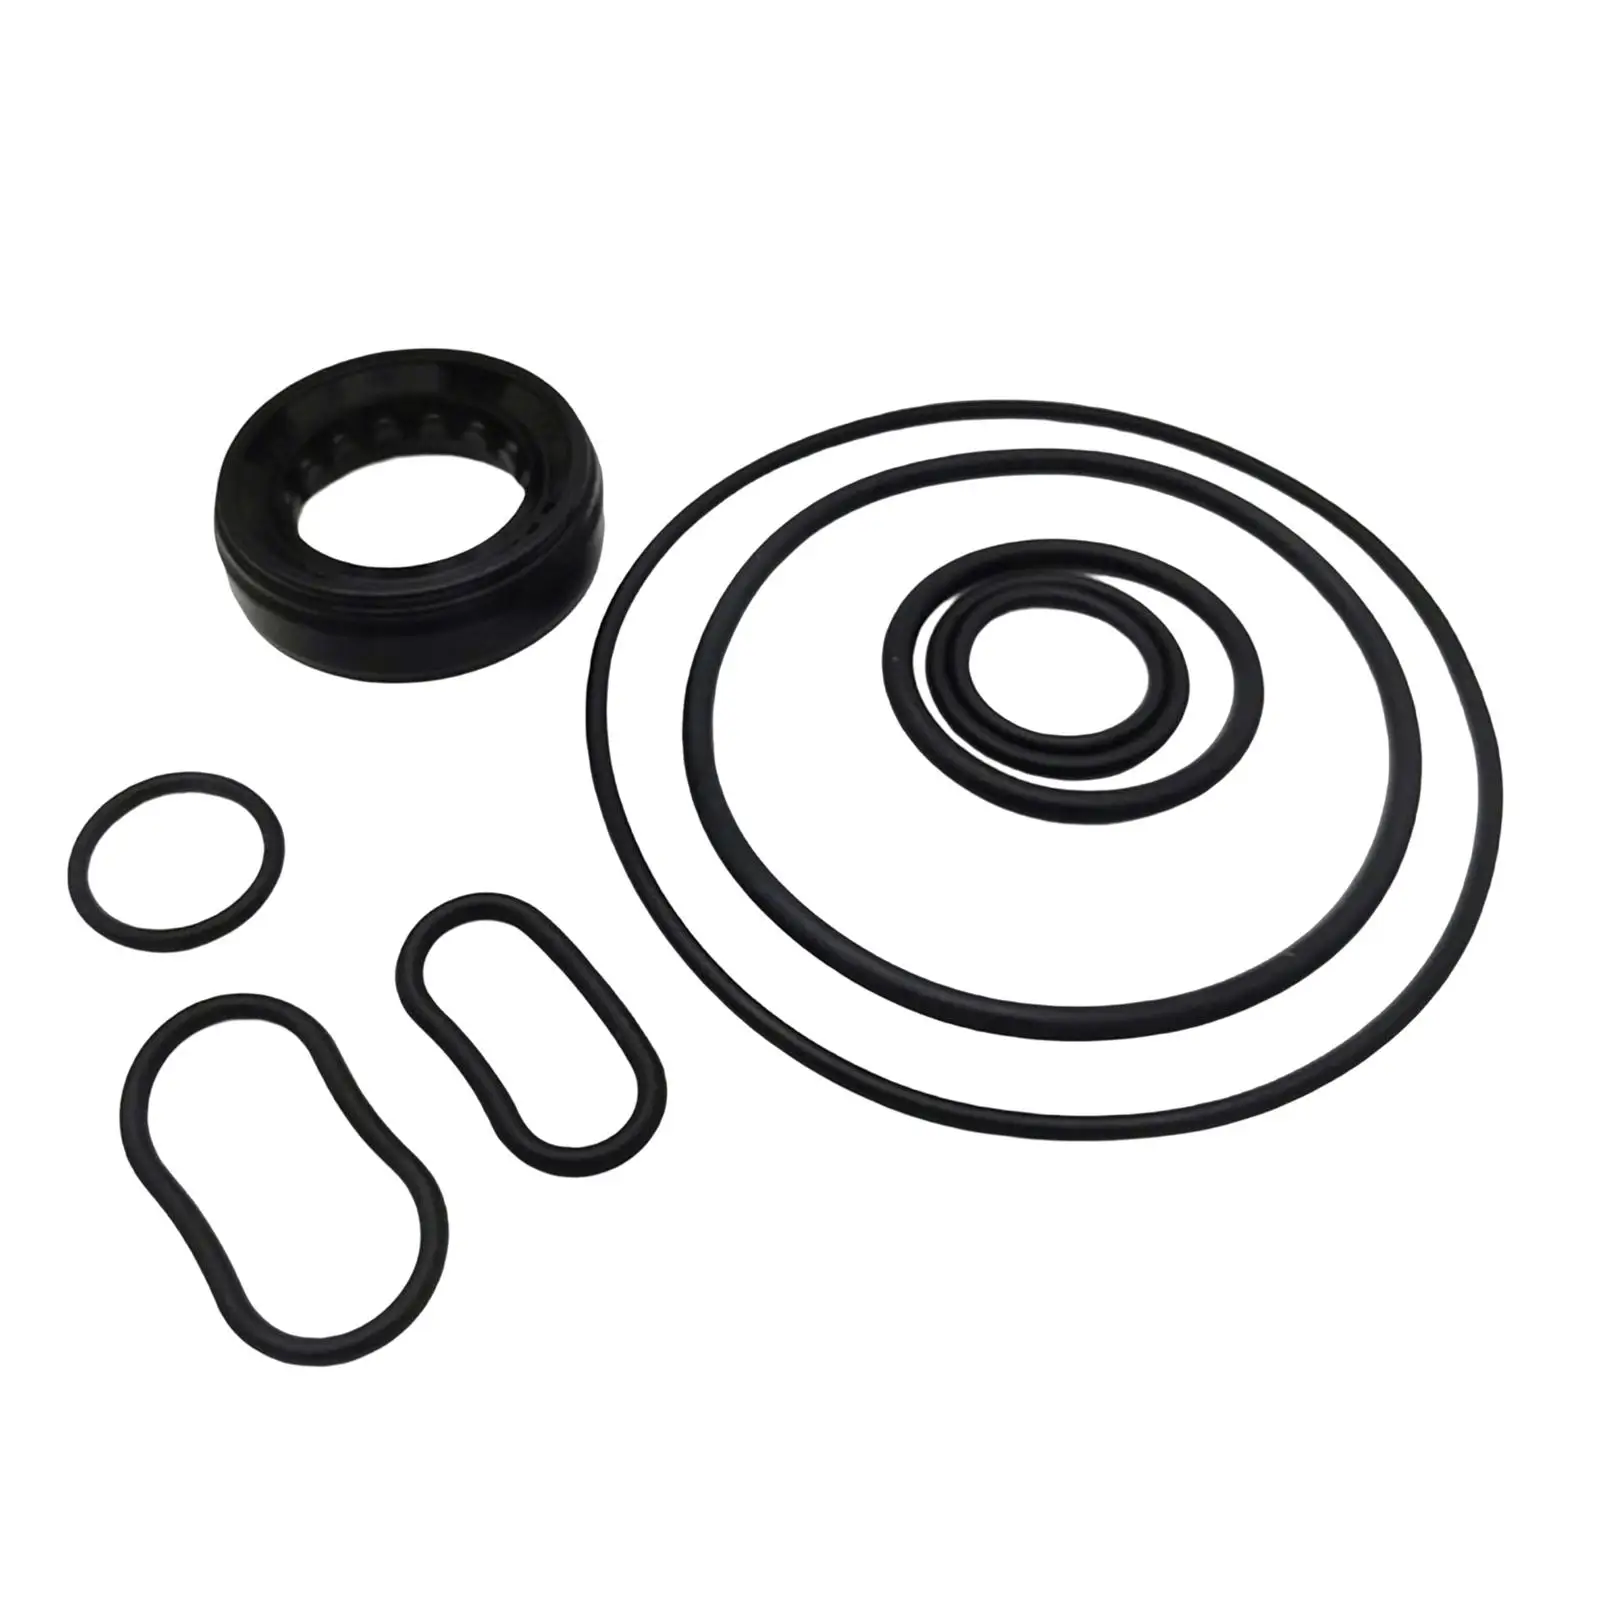 Power Steering Pump Seal Repair Set 06539-Pnc-003 Accessories With O Rings